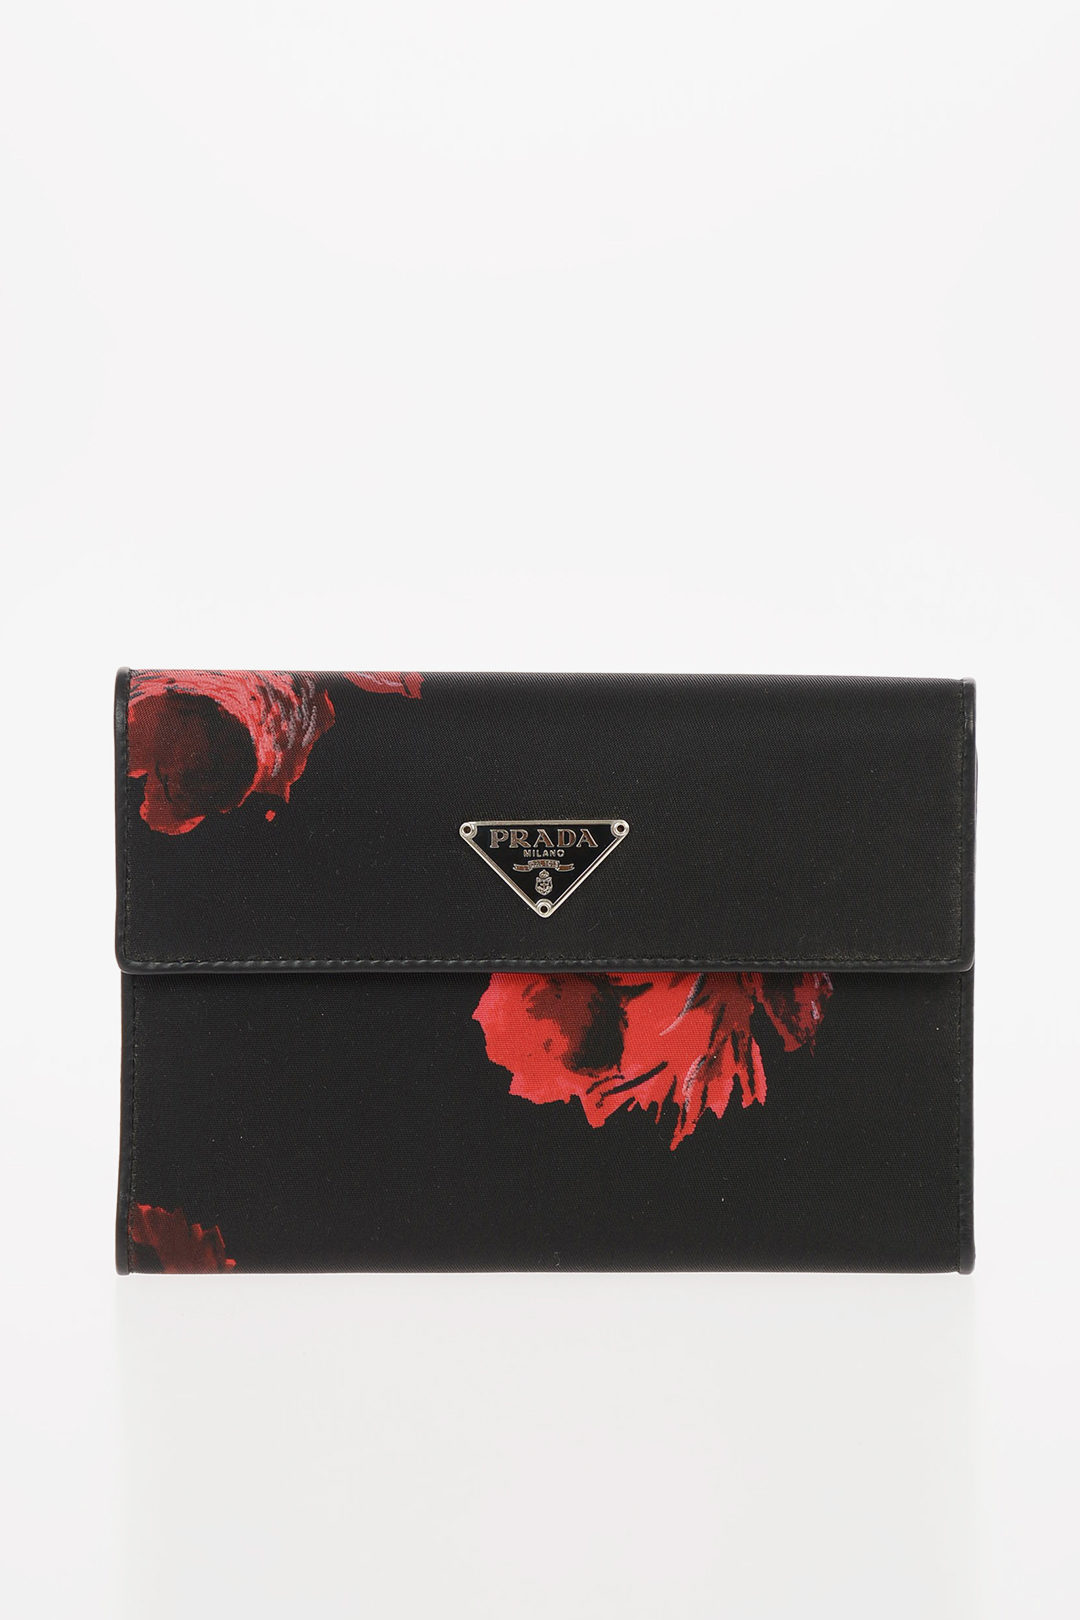 prada flower wallet